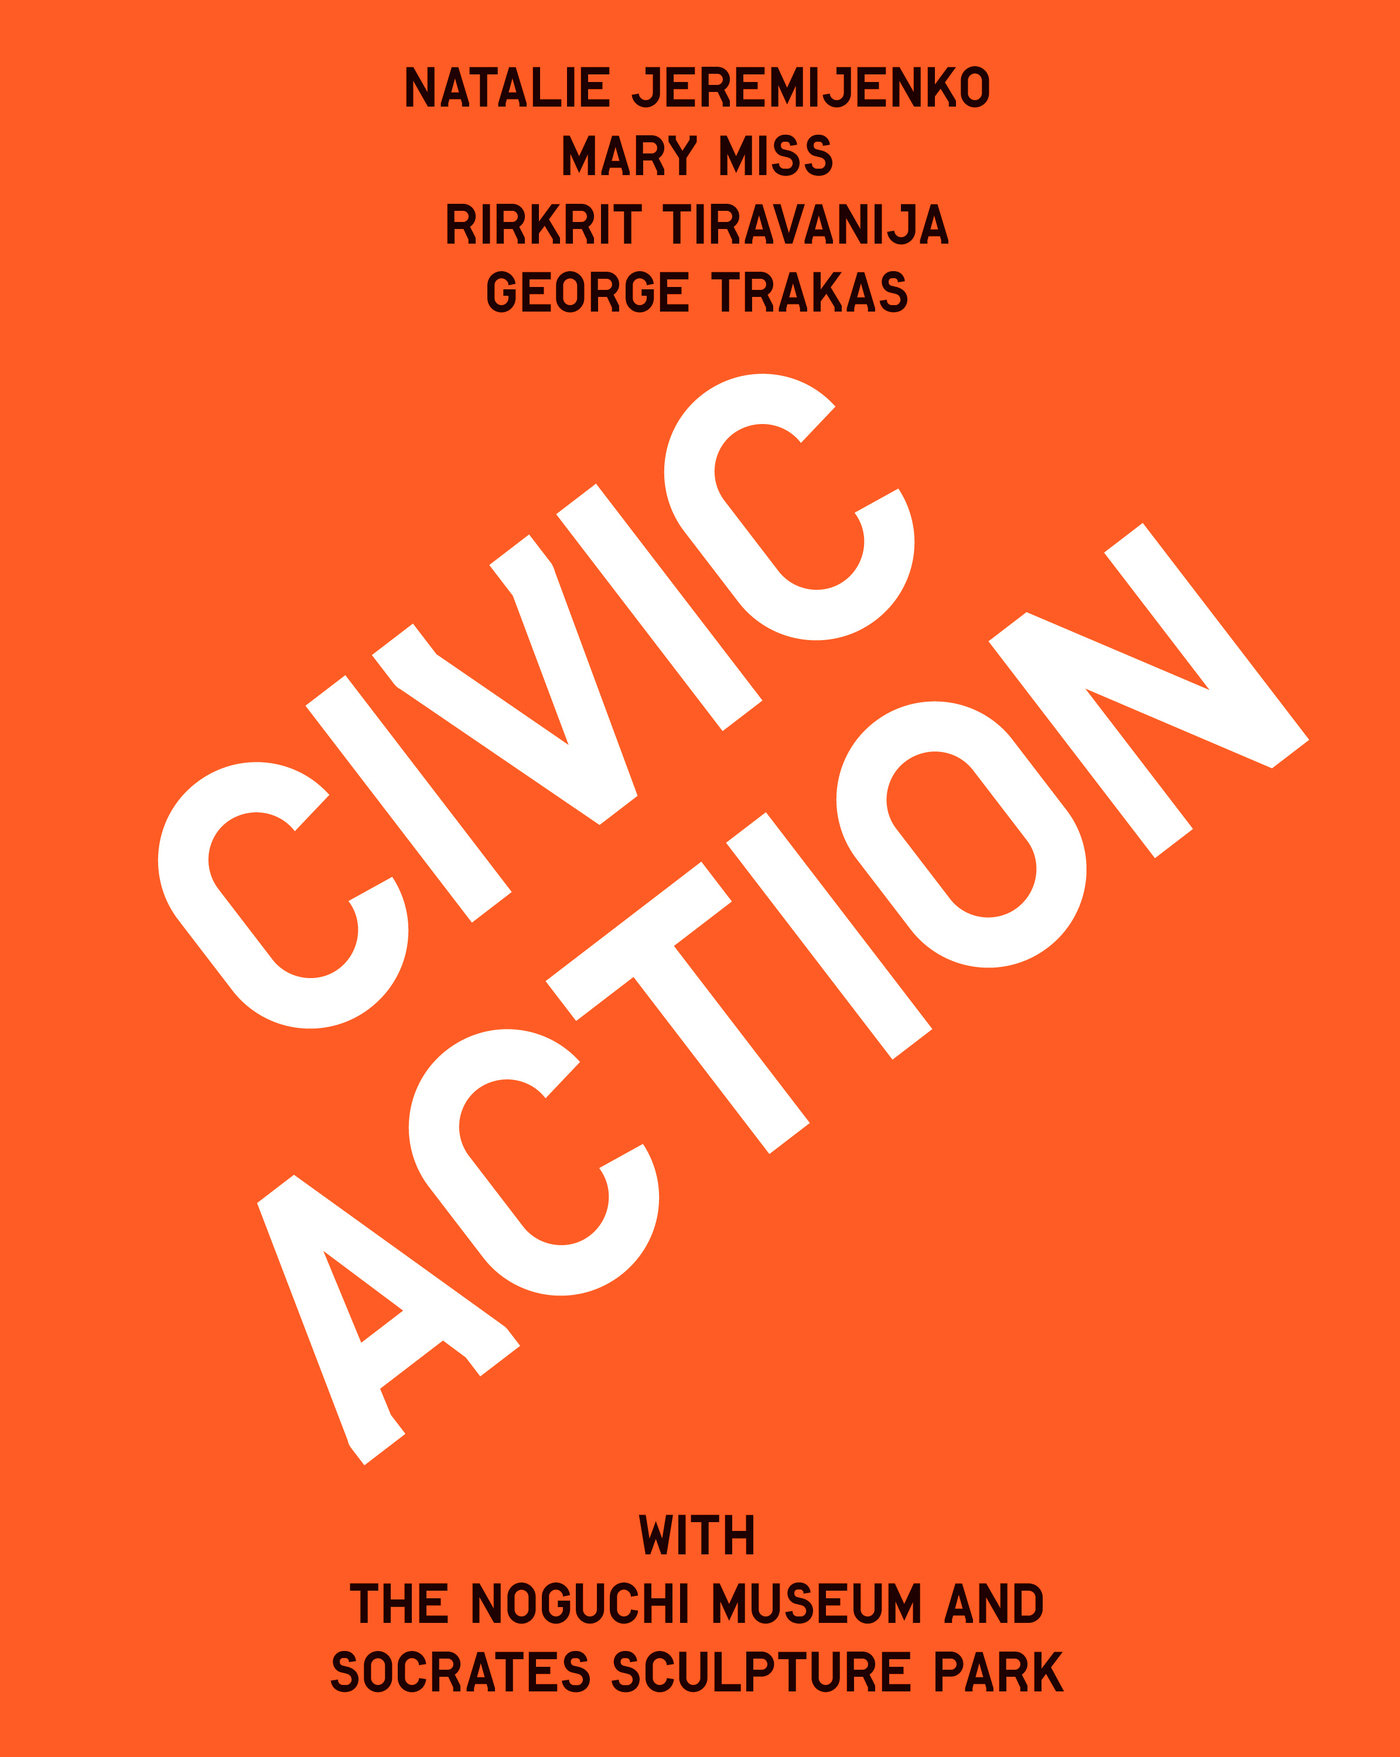 Civic Action